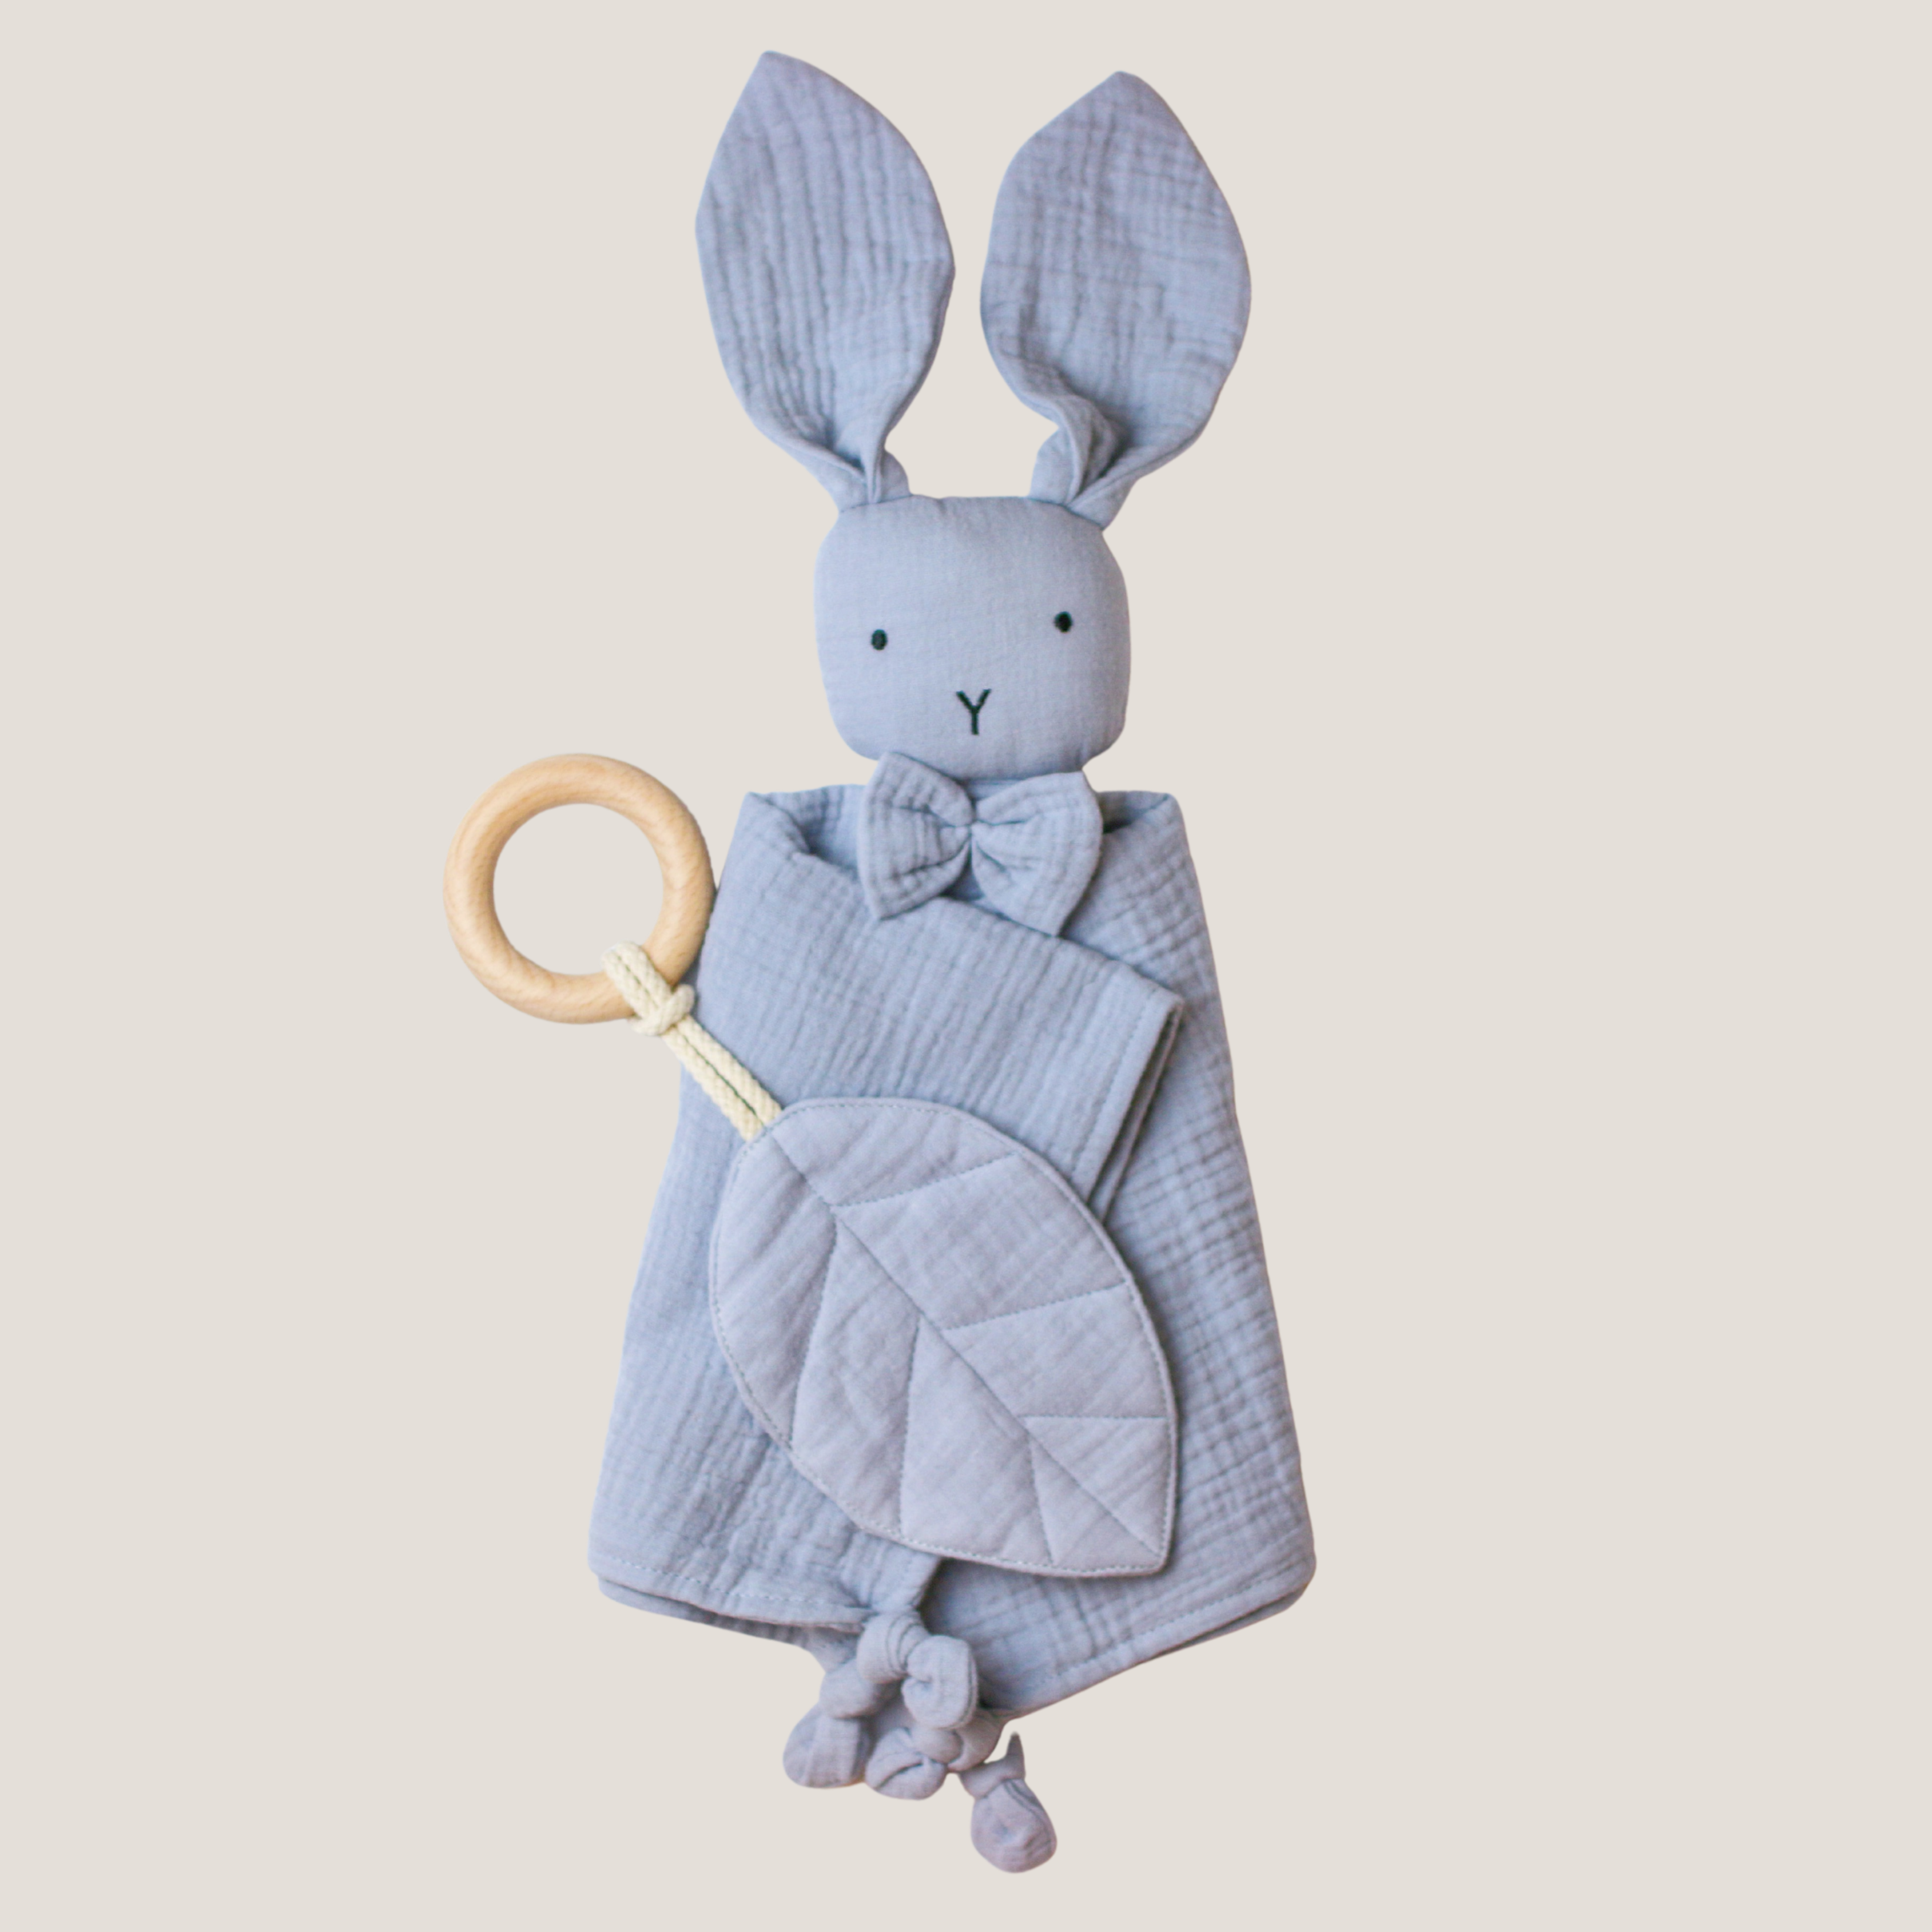 Snuggly Bunny Comforter & Ring Leaf Teether Bundle in Gentle Grey